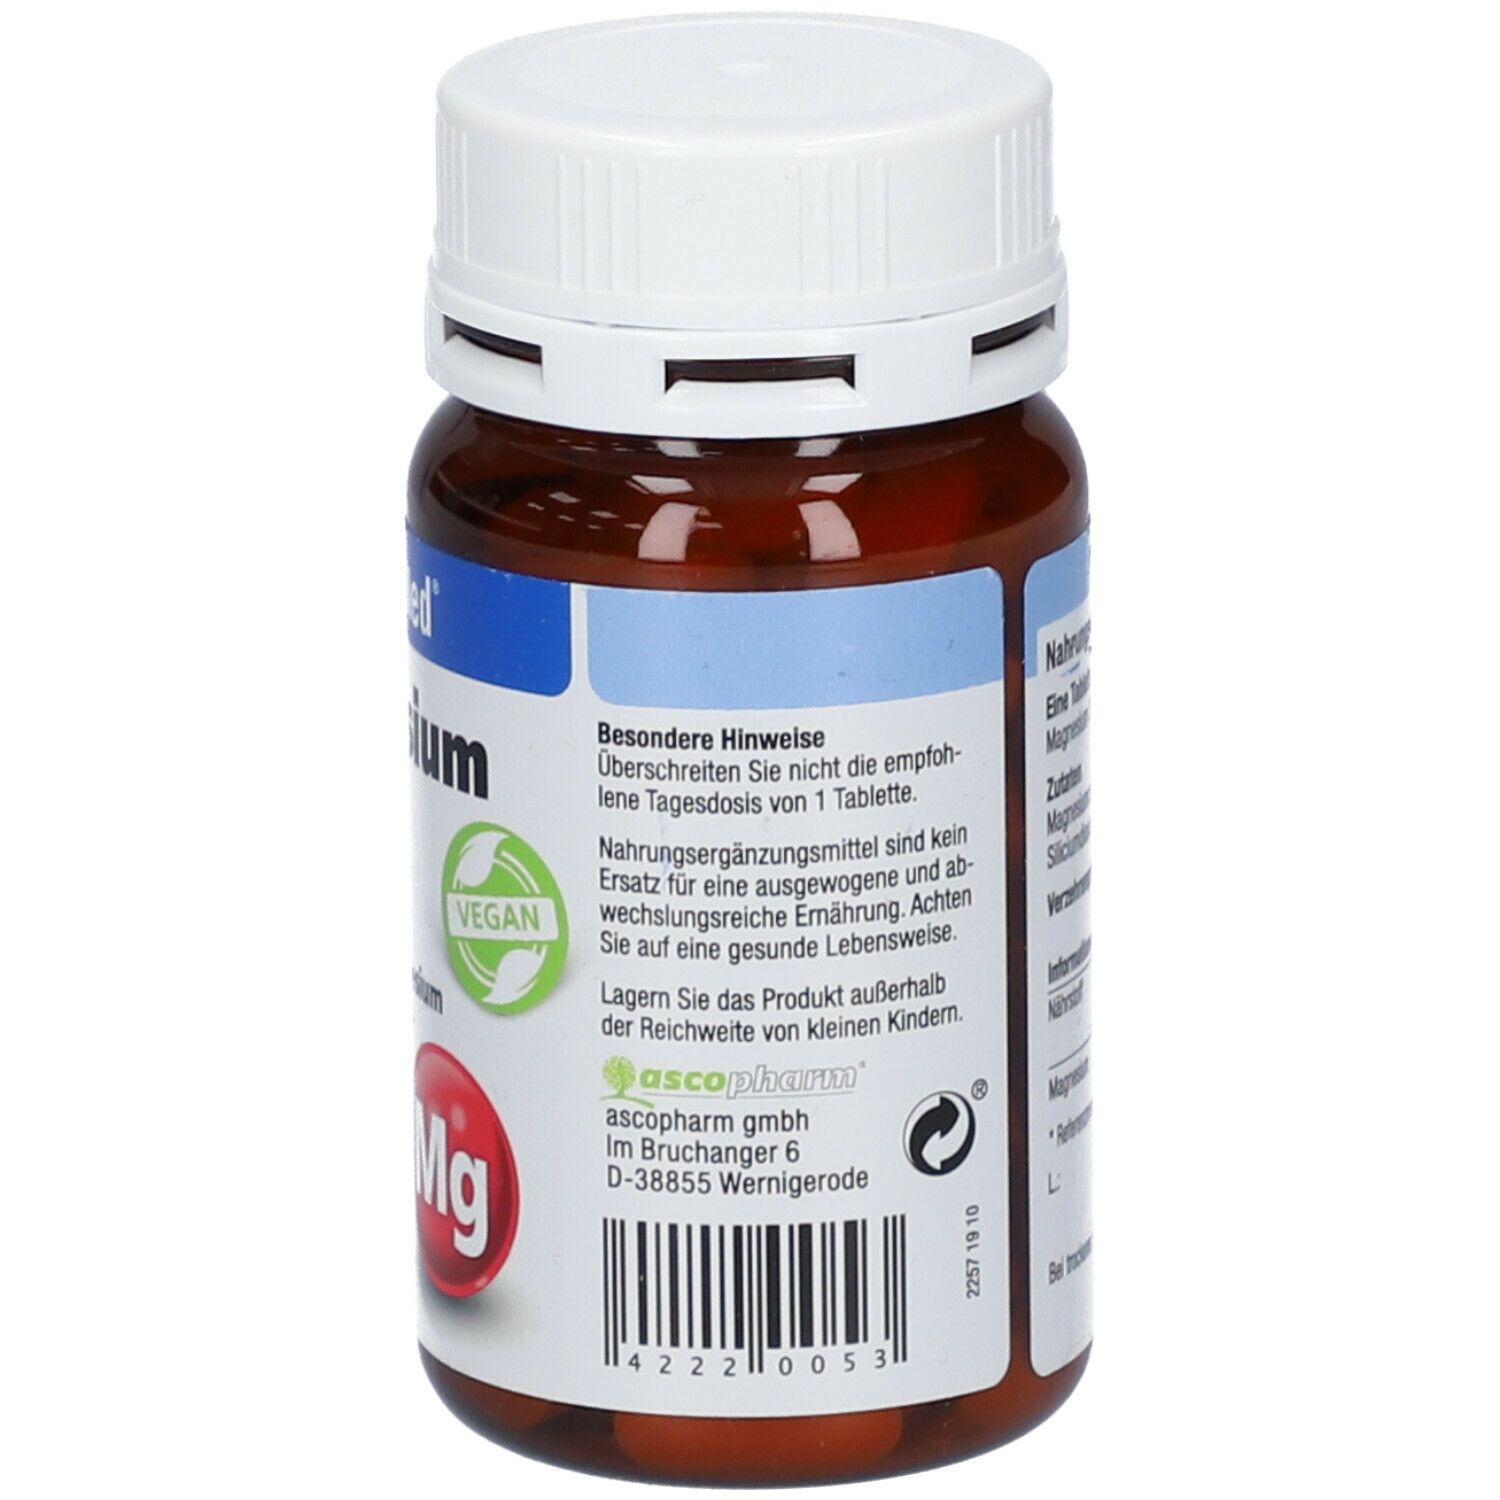 revoMed Magnesium 250 mg